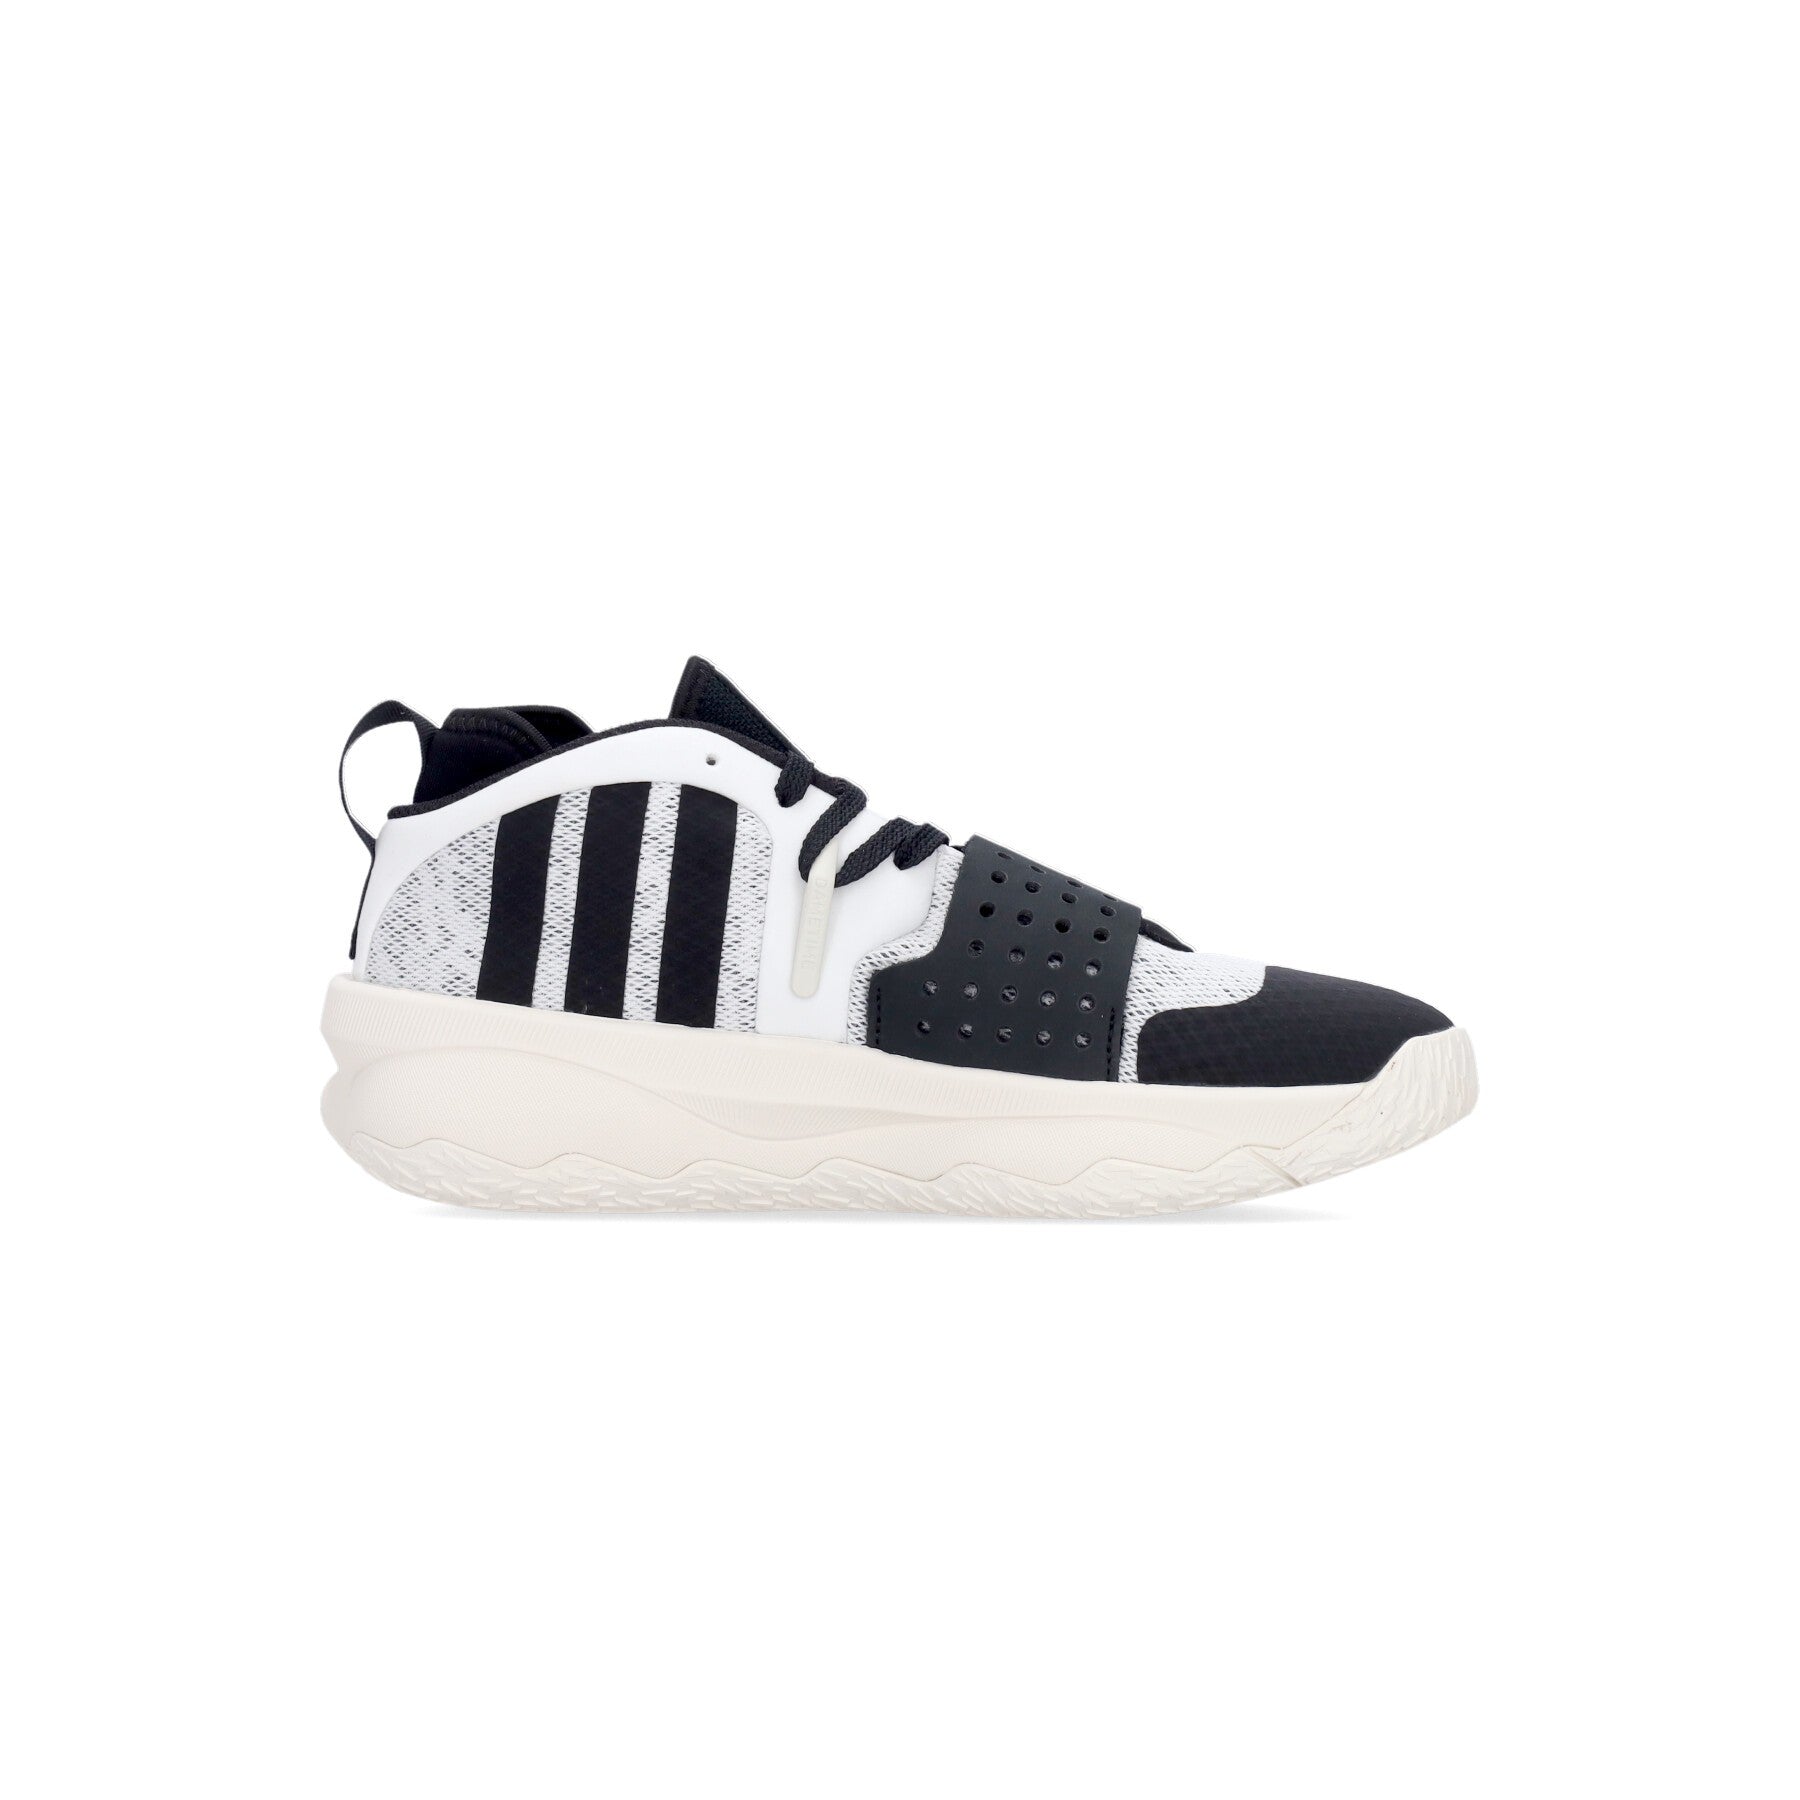 Adidas, Scarpa Basket Uomo Dame 8 Extply, Cloud White/core Black/cloud White